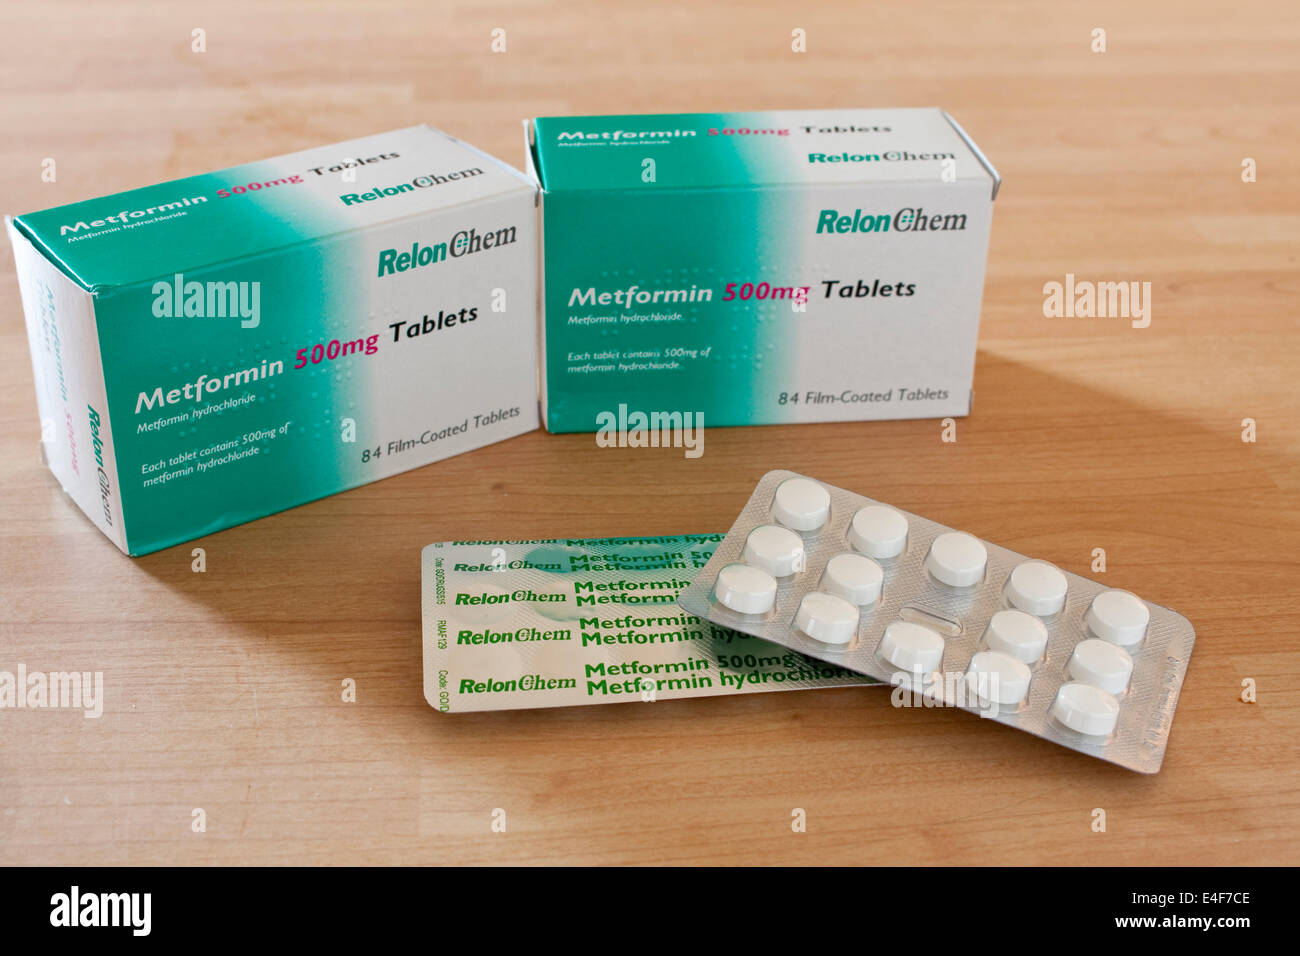 Diabetes medikament -Fotos und -Bildmaterial in hoher Auflösung – Alamy